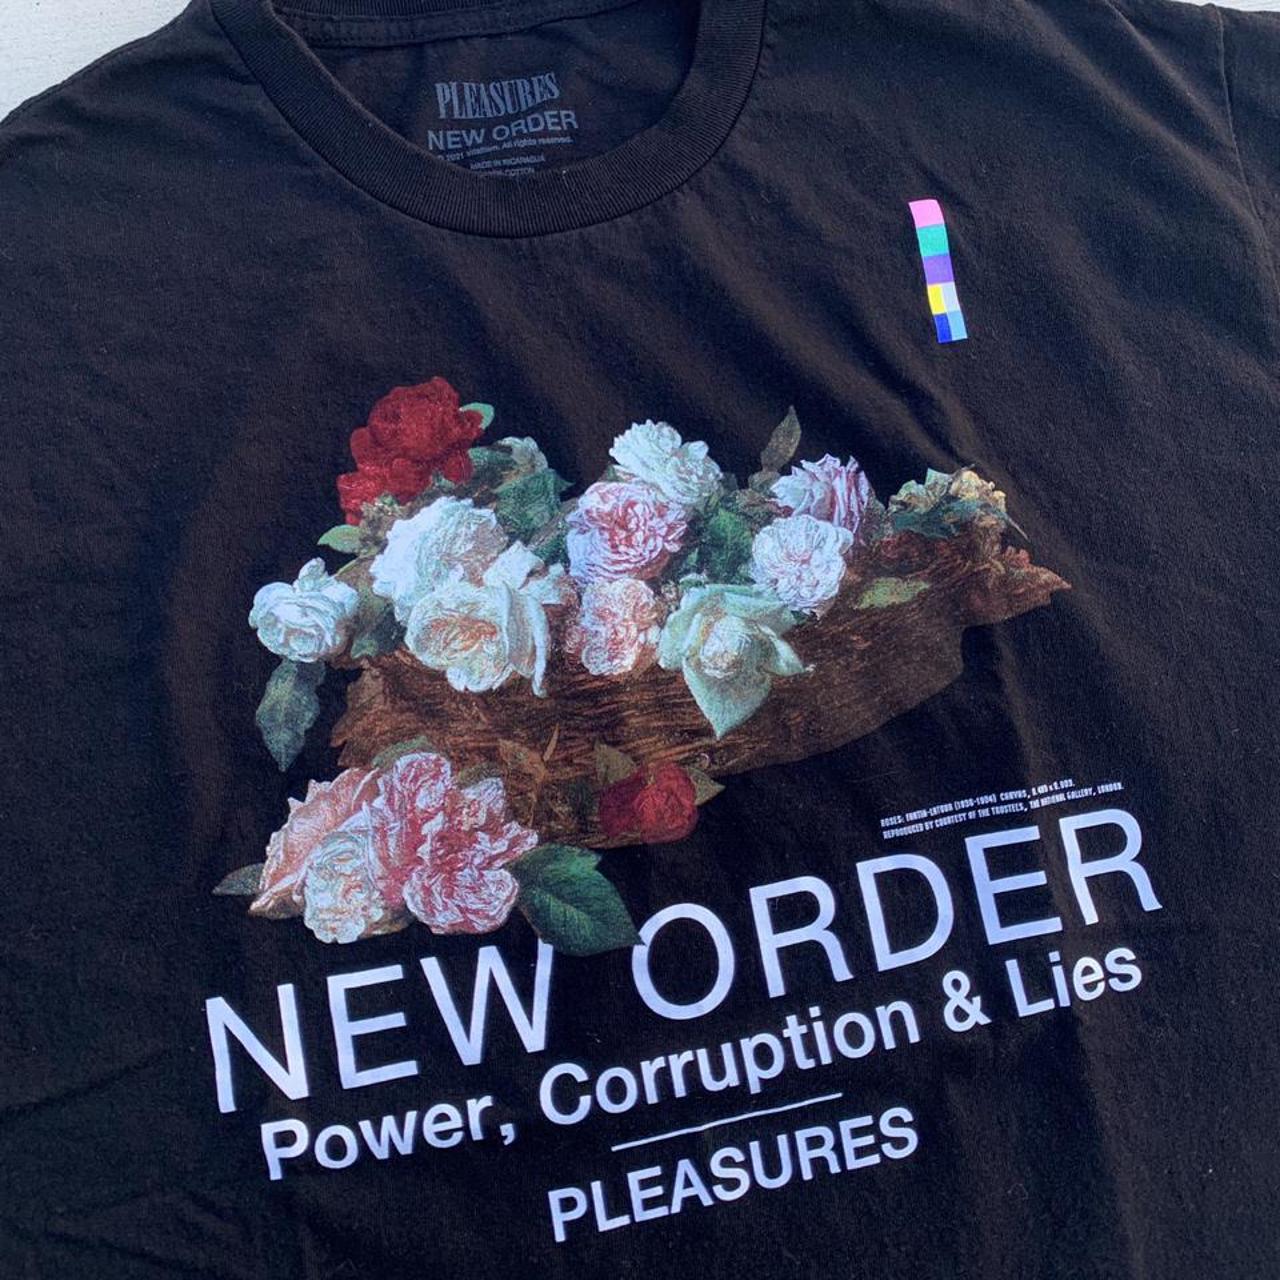 Product Image 2 - Pleasures New Order T-shirt
Power, Corruption